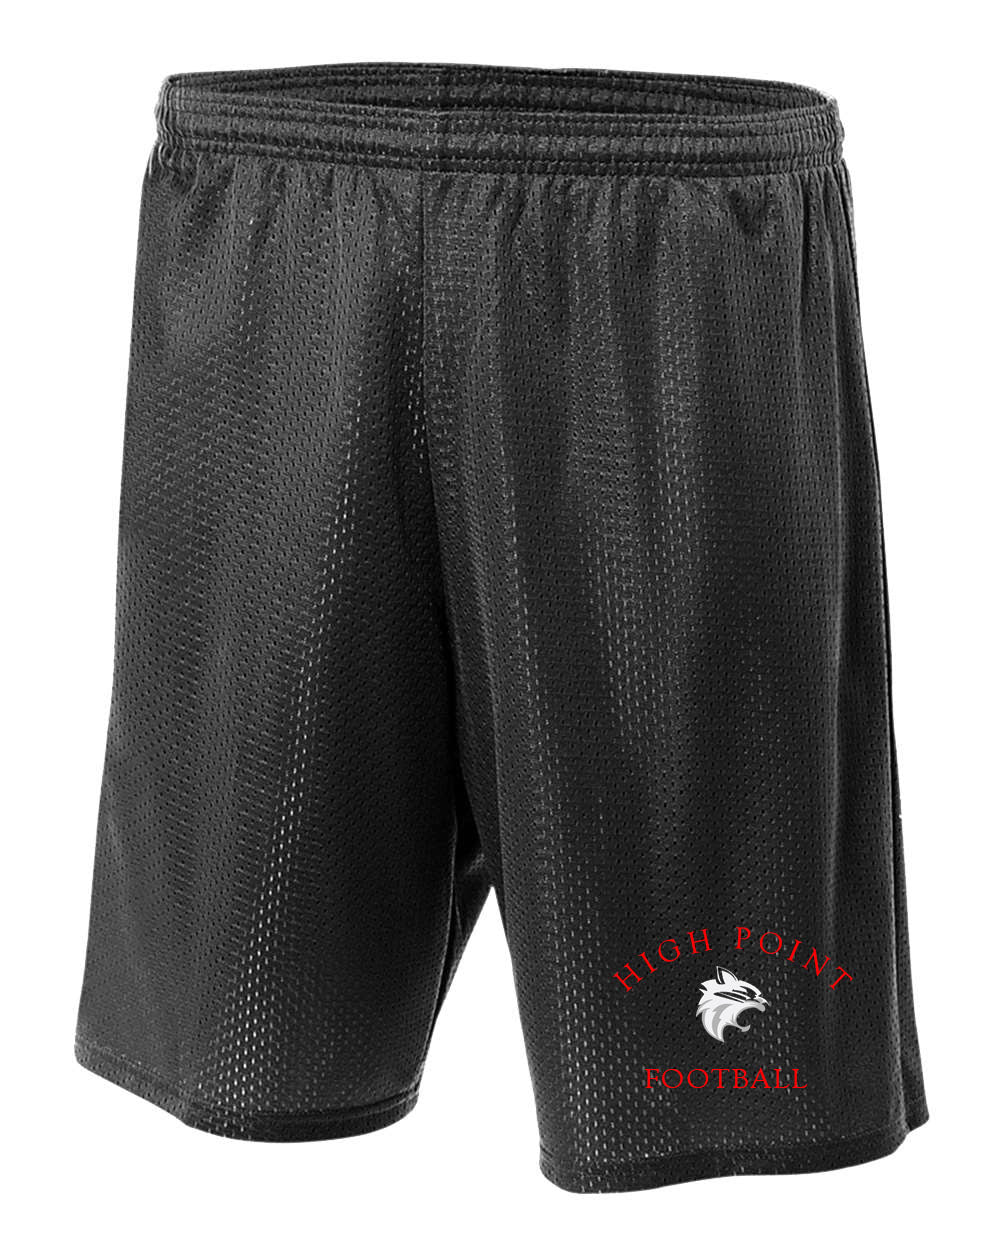 High Point Football Design 3 Shorts